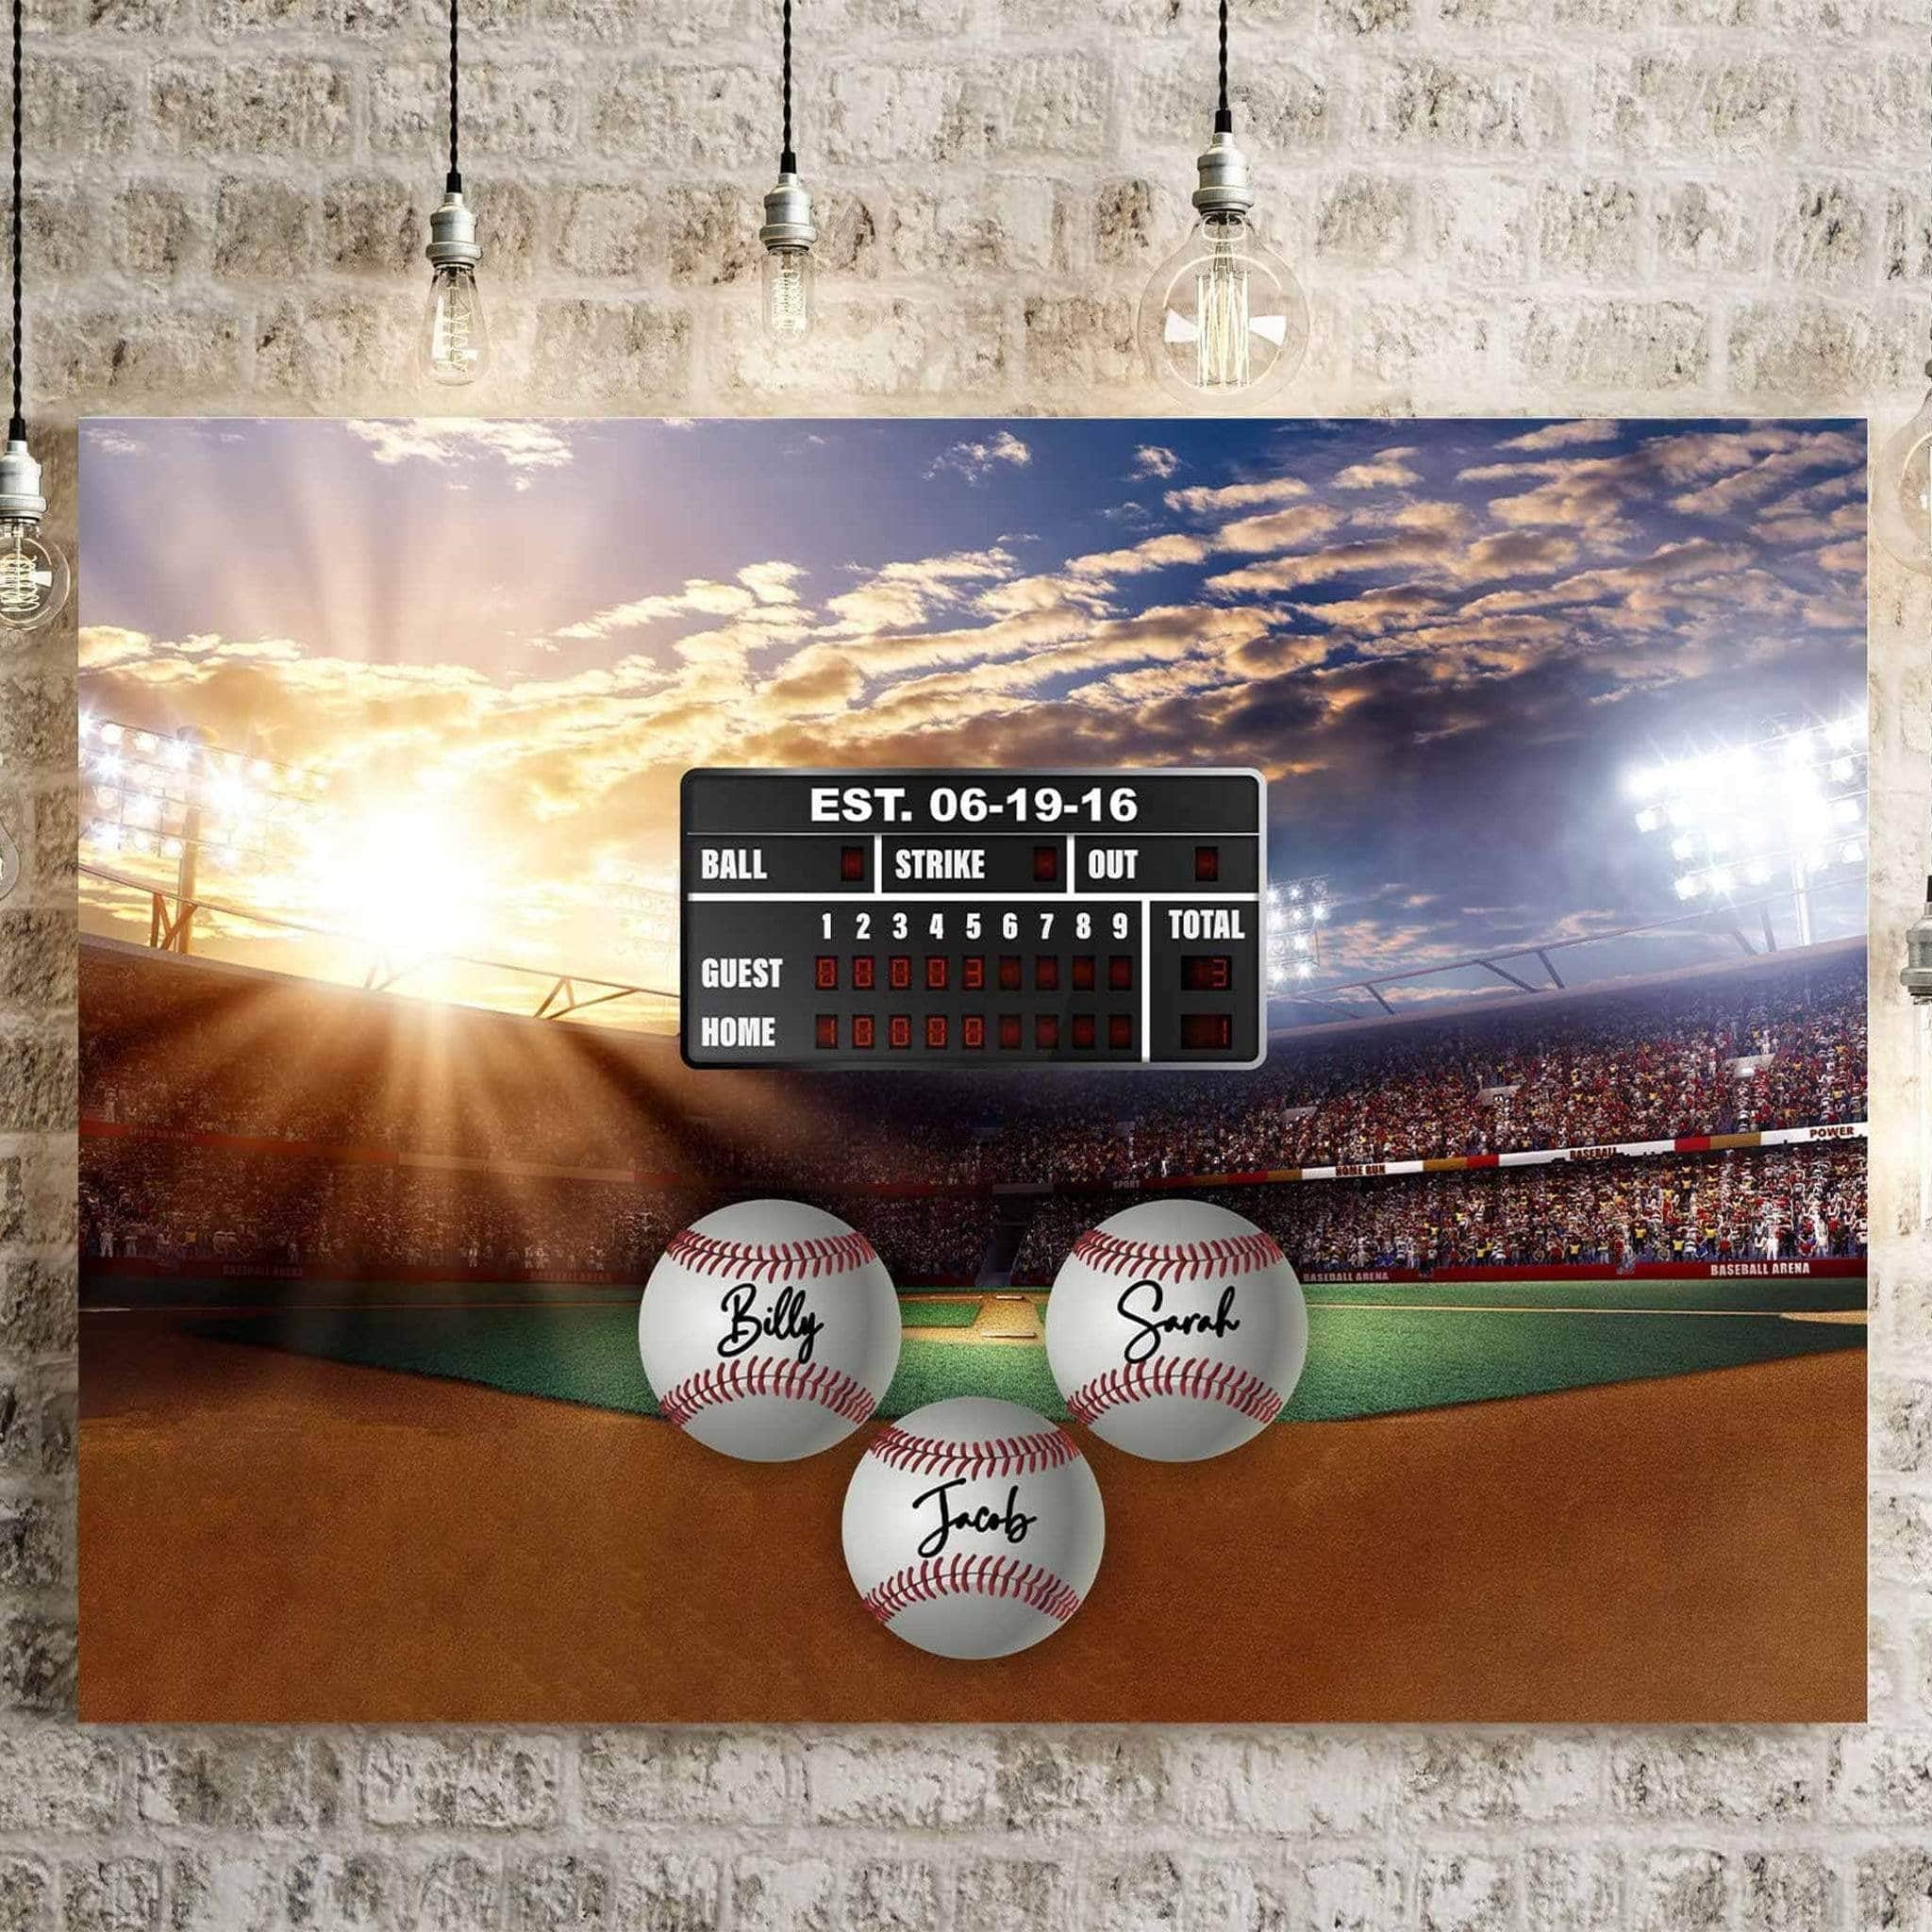 Baseball Stadium V1 Multiple Names Personalized Baseballs And Scoreboard Sign CanvasCustomly Gifts